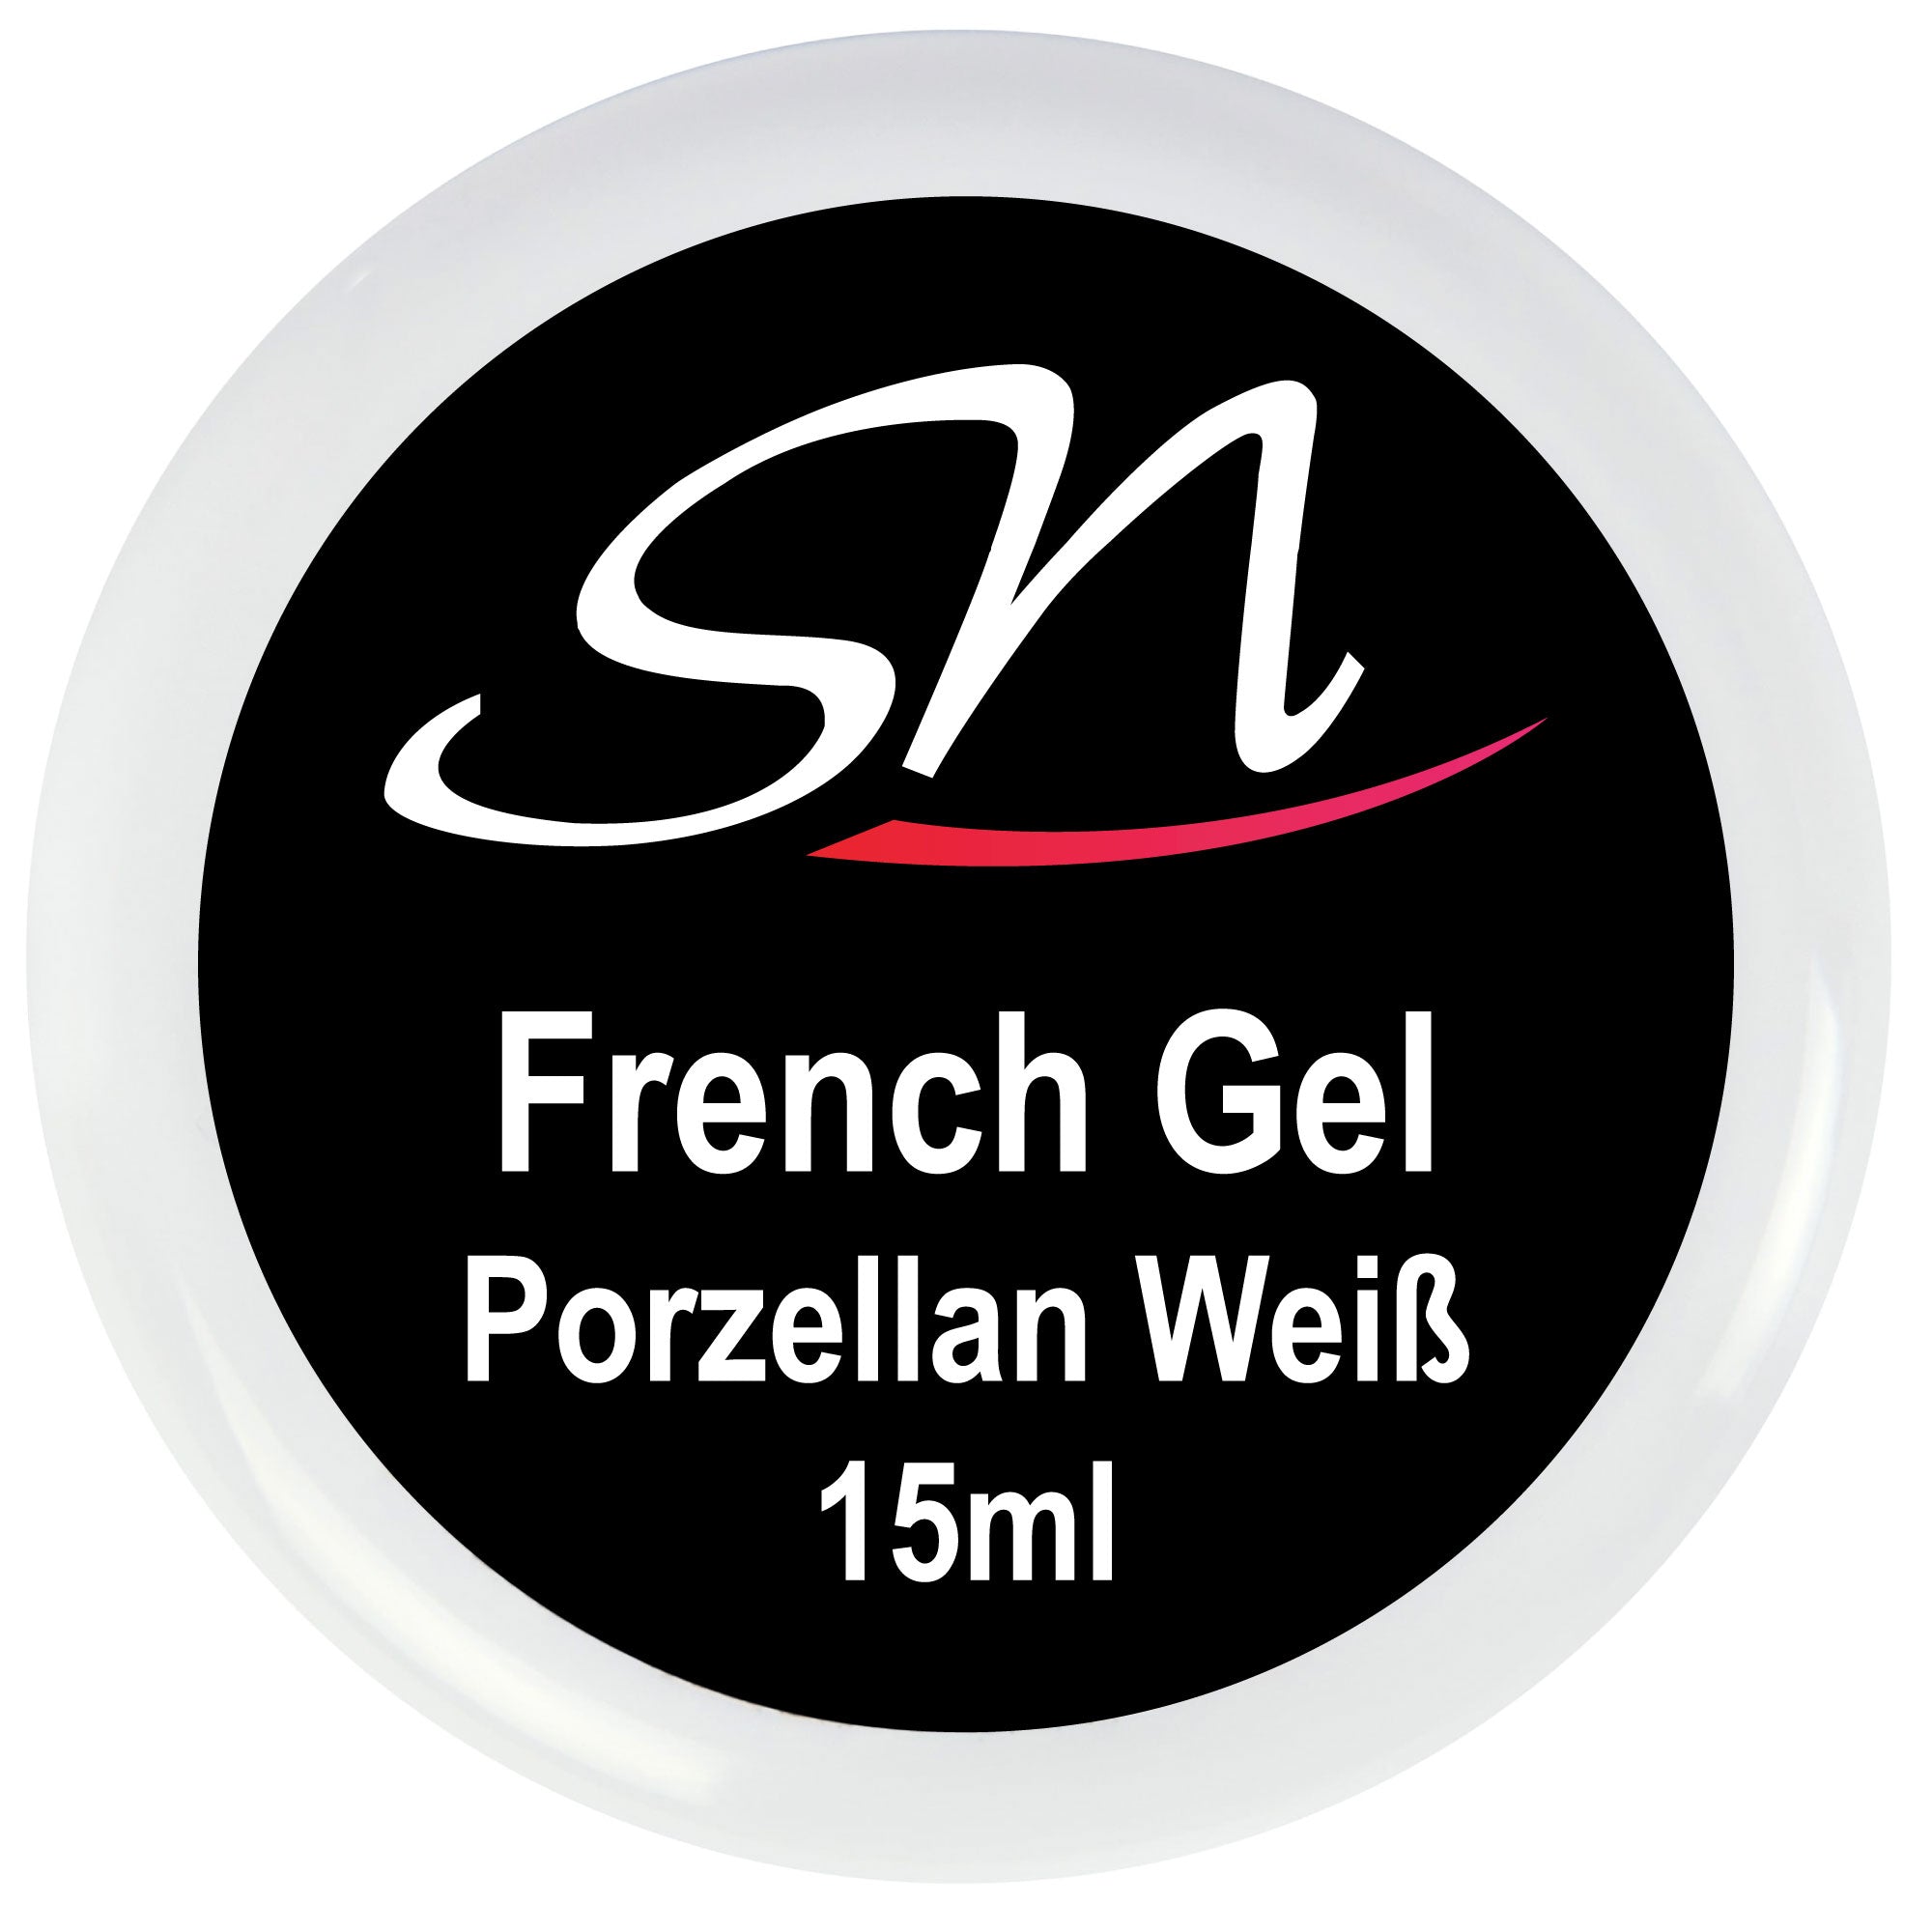 SN French Gel Porzellan weiss 15ml